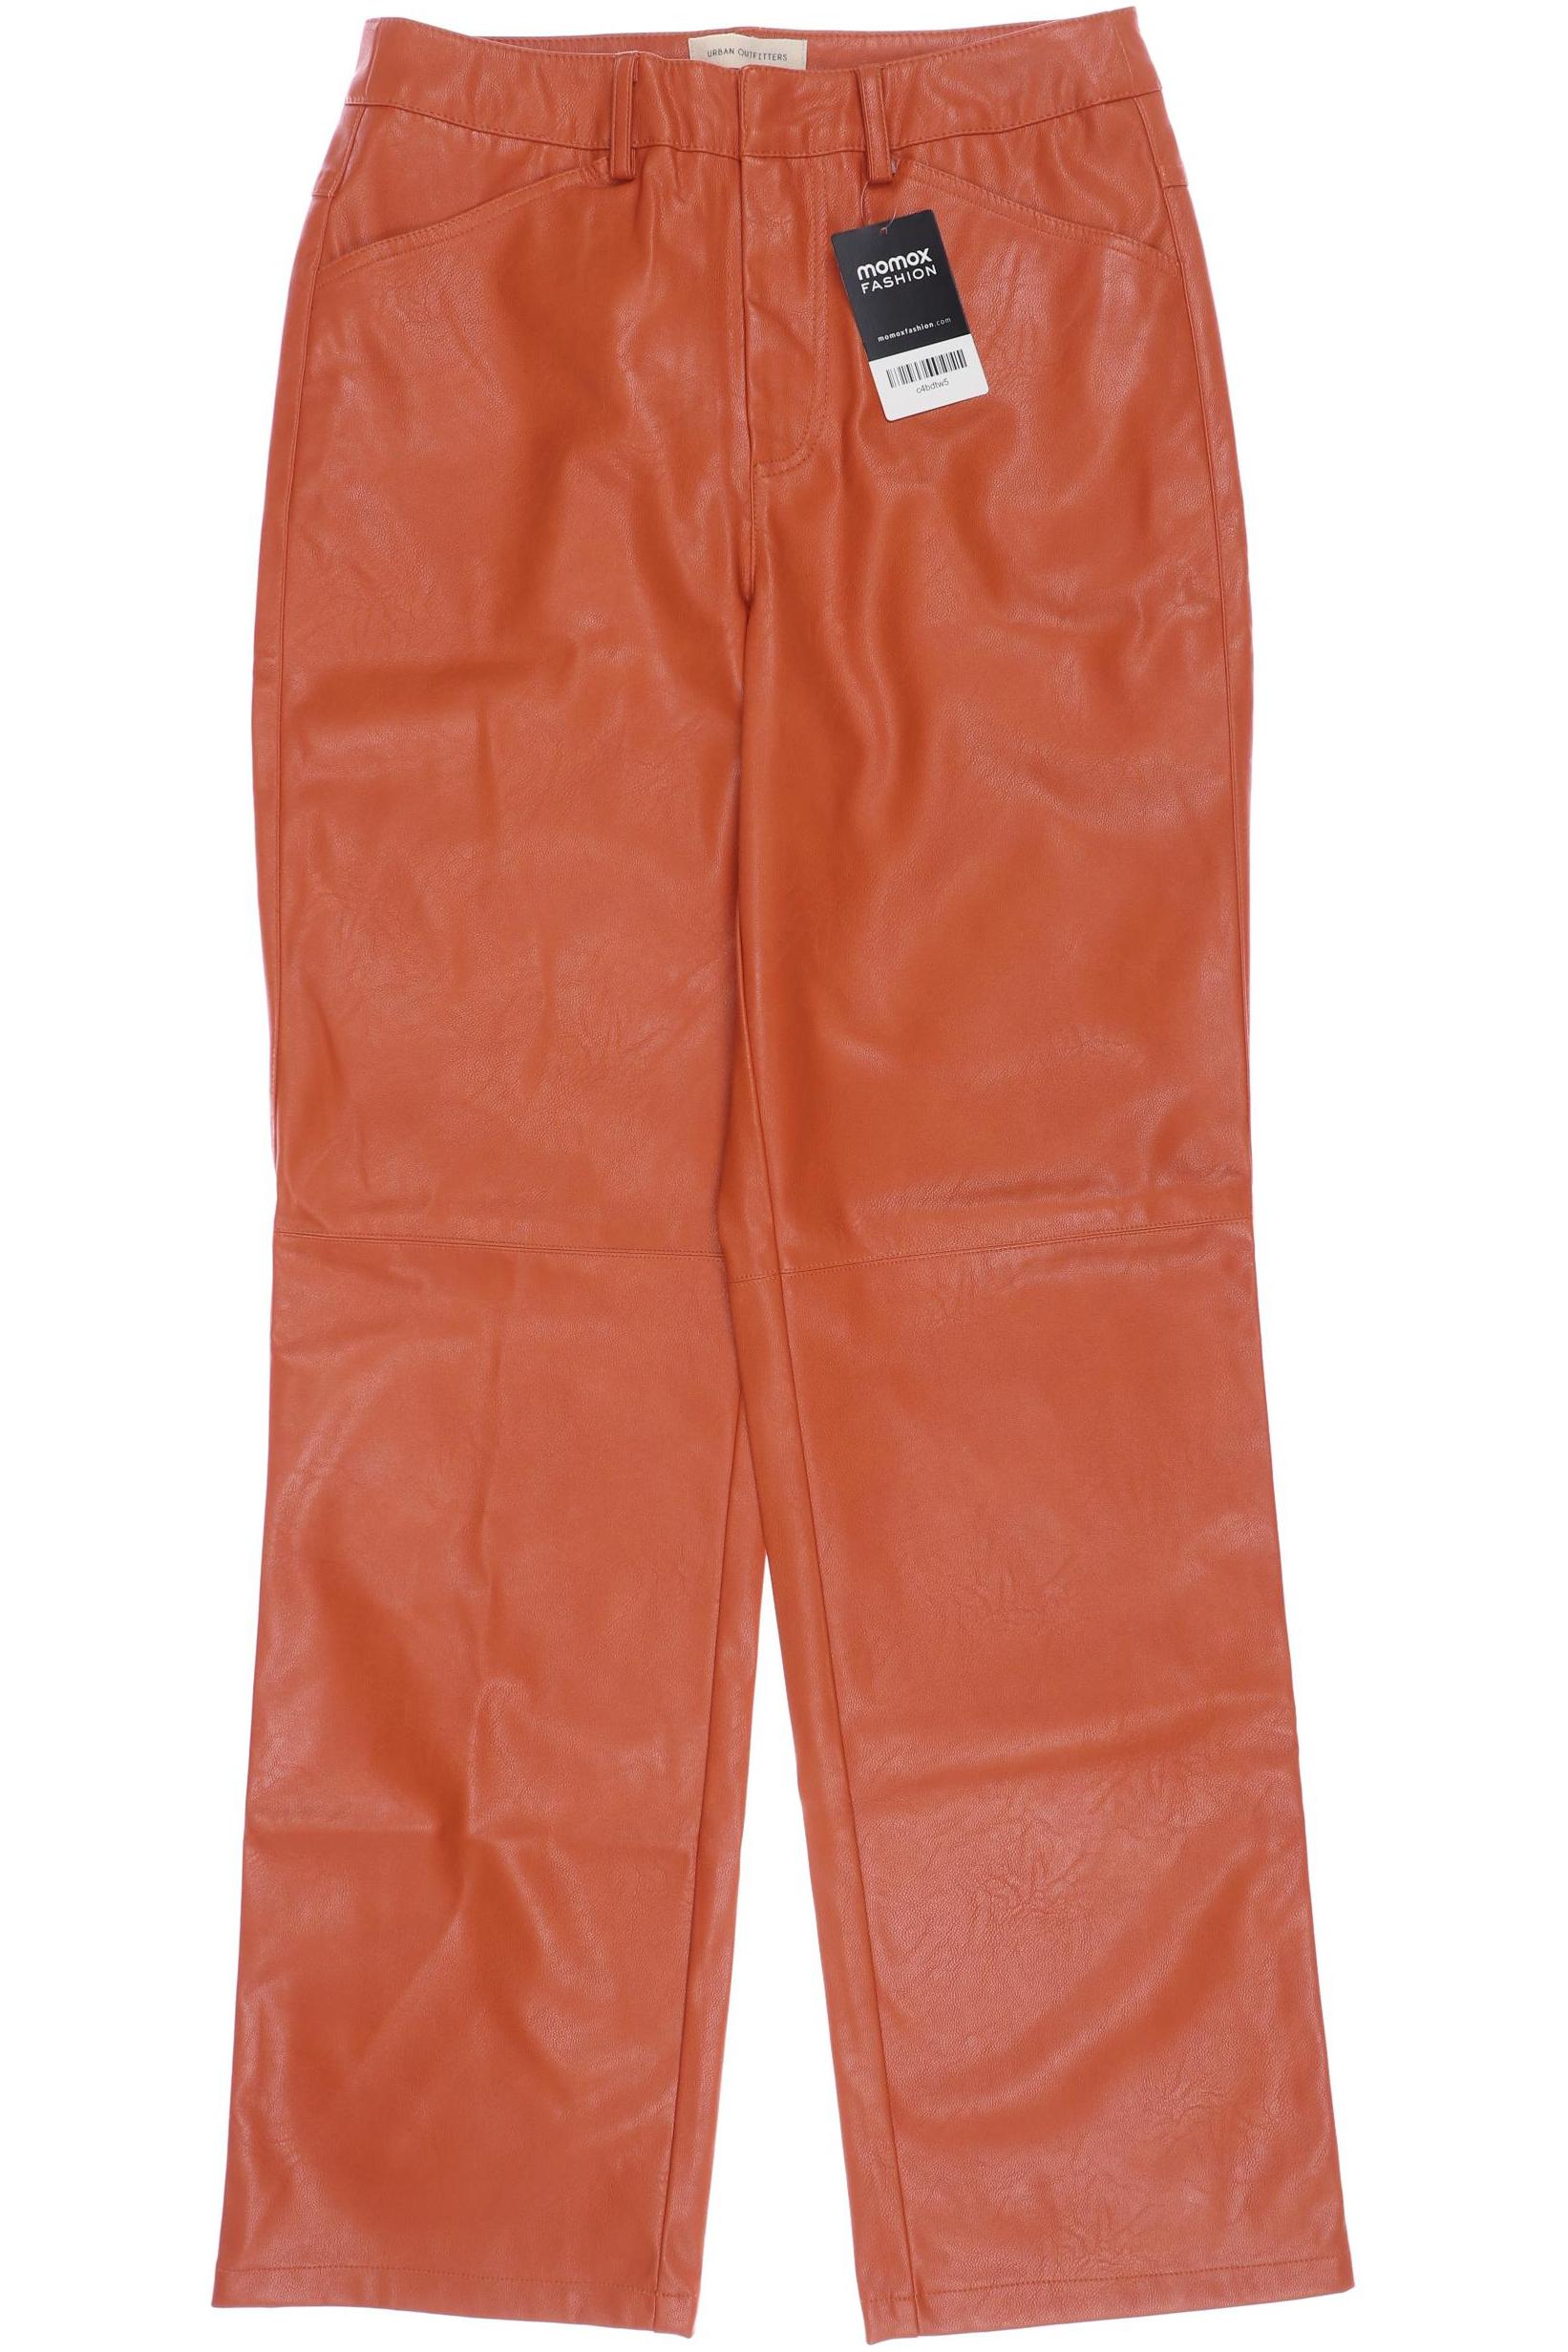 Urban Outfitters Damen Stoffhose, orange von Urban Outfitters